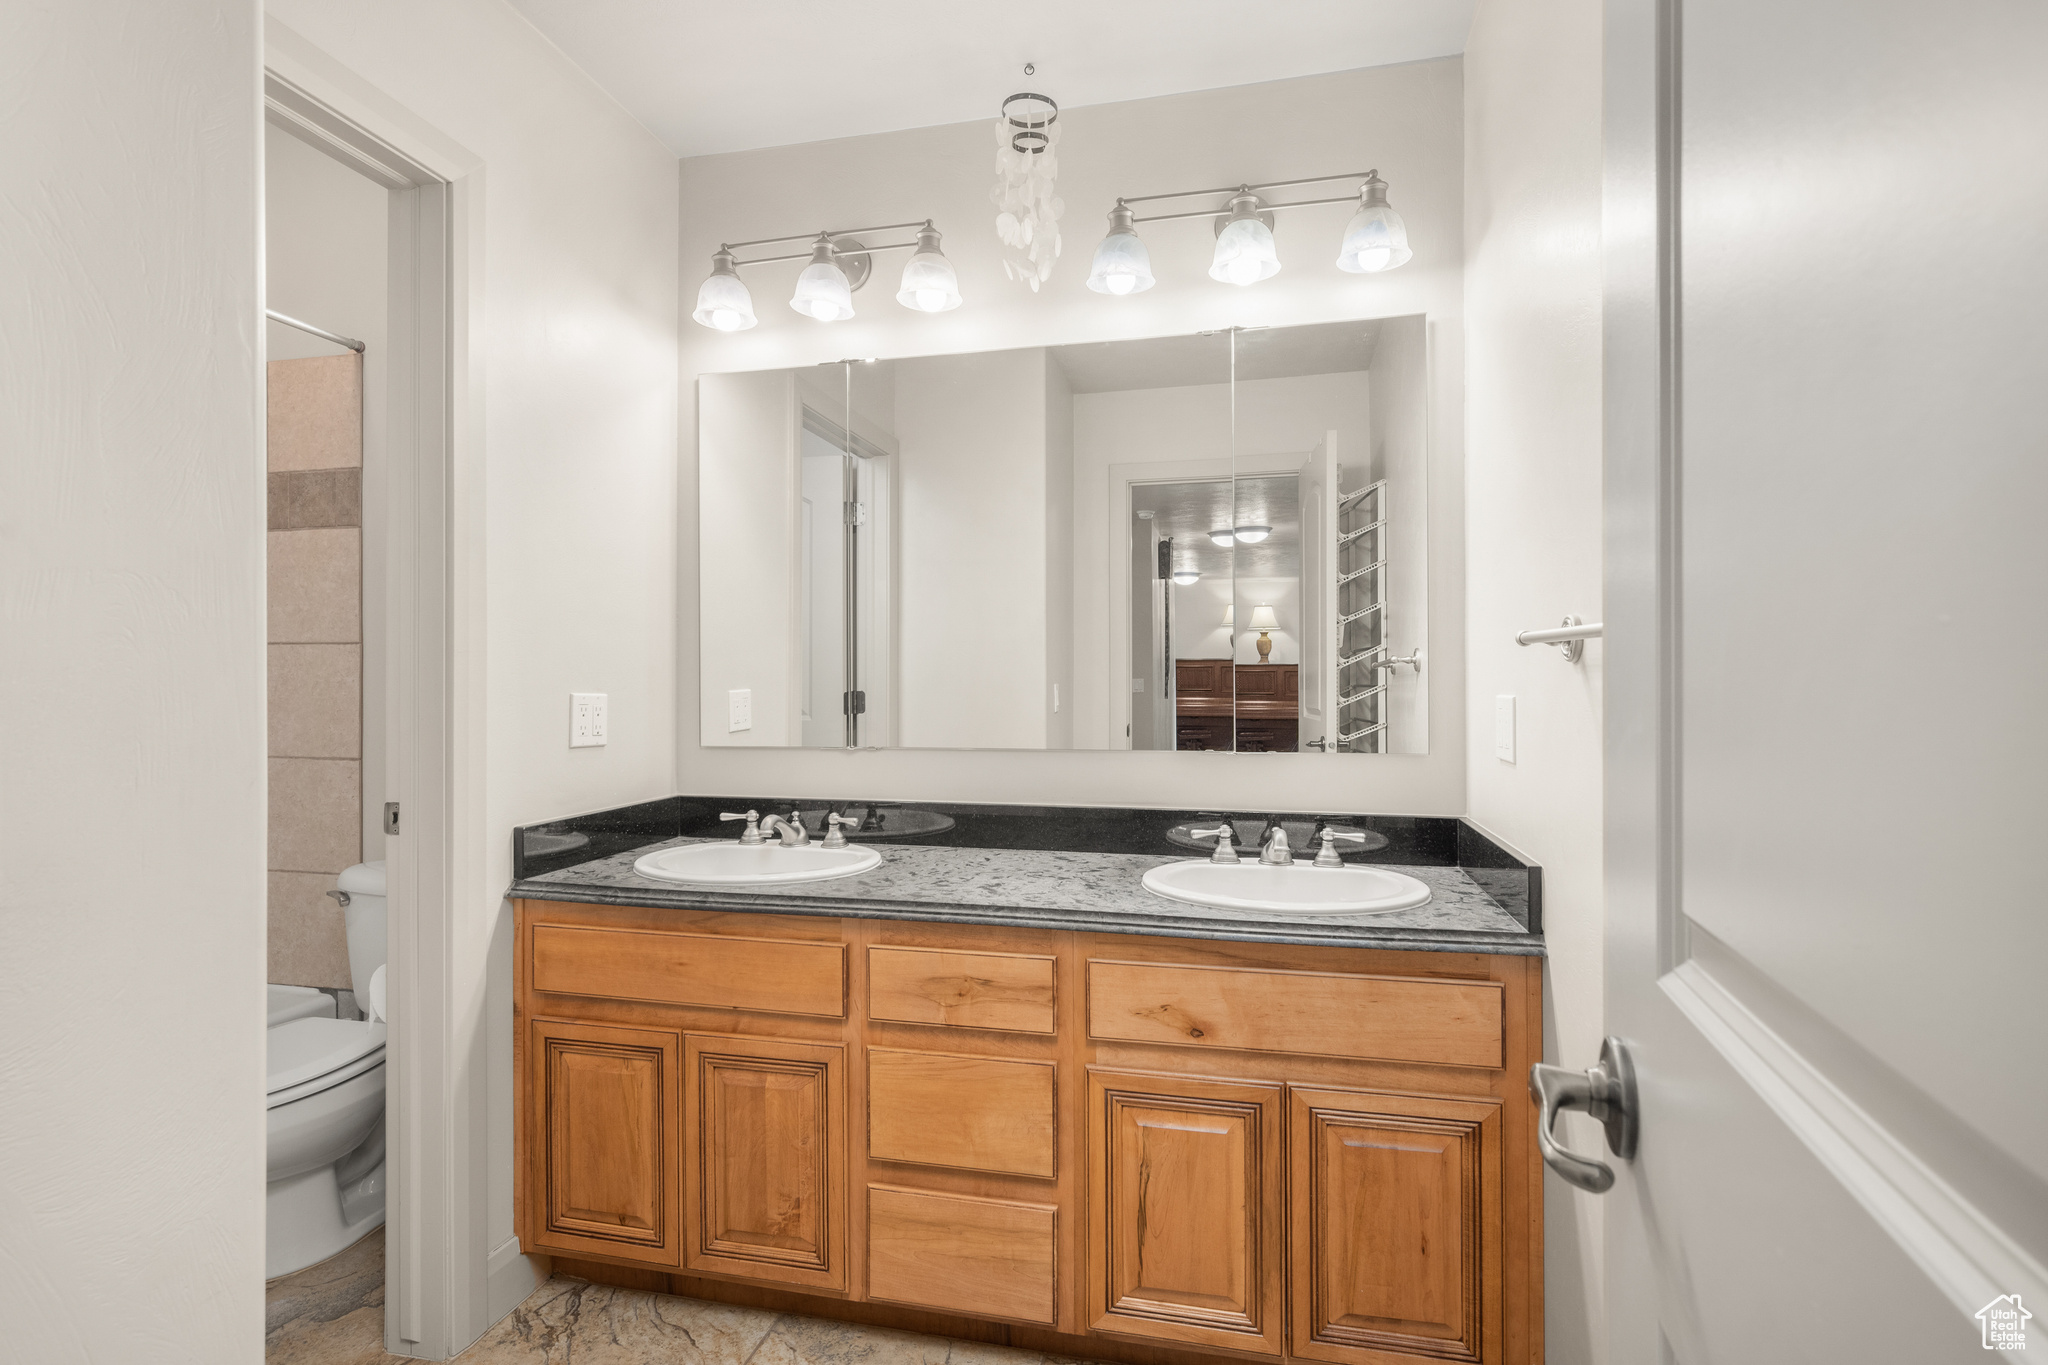 Bathroom featuring tile floors, toilet, and double sink vanity